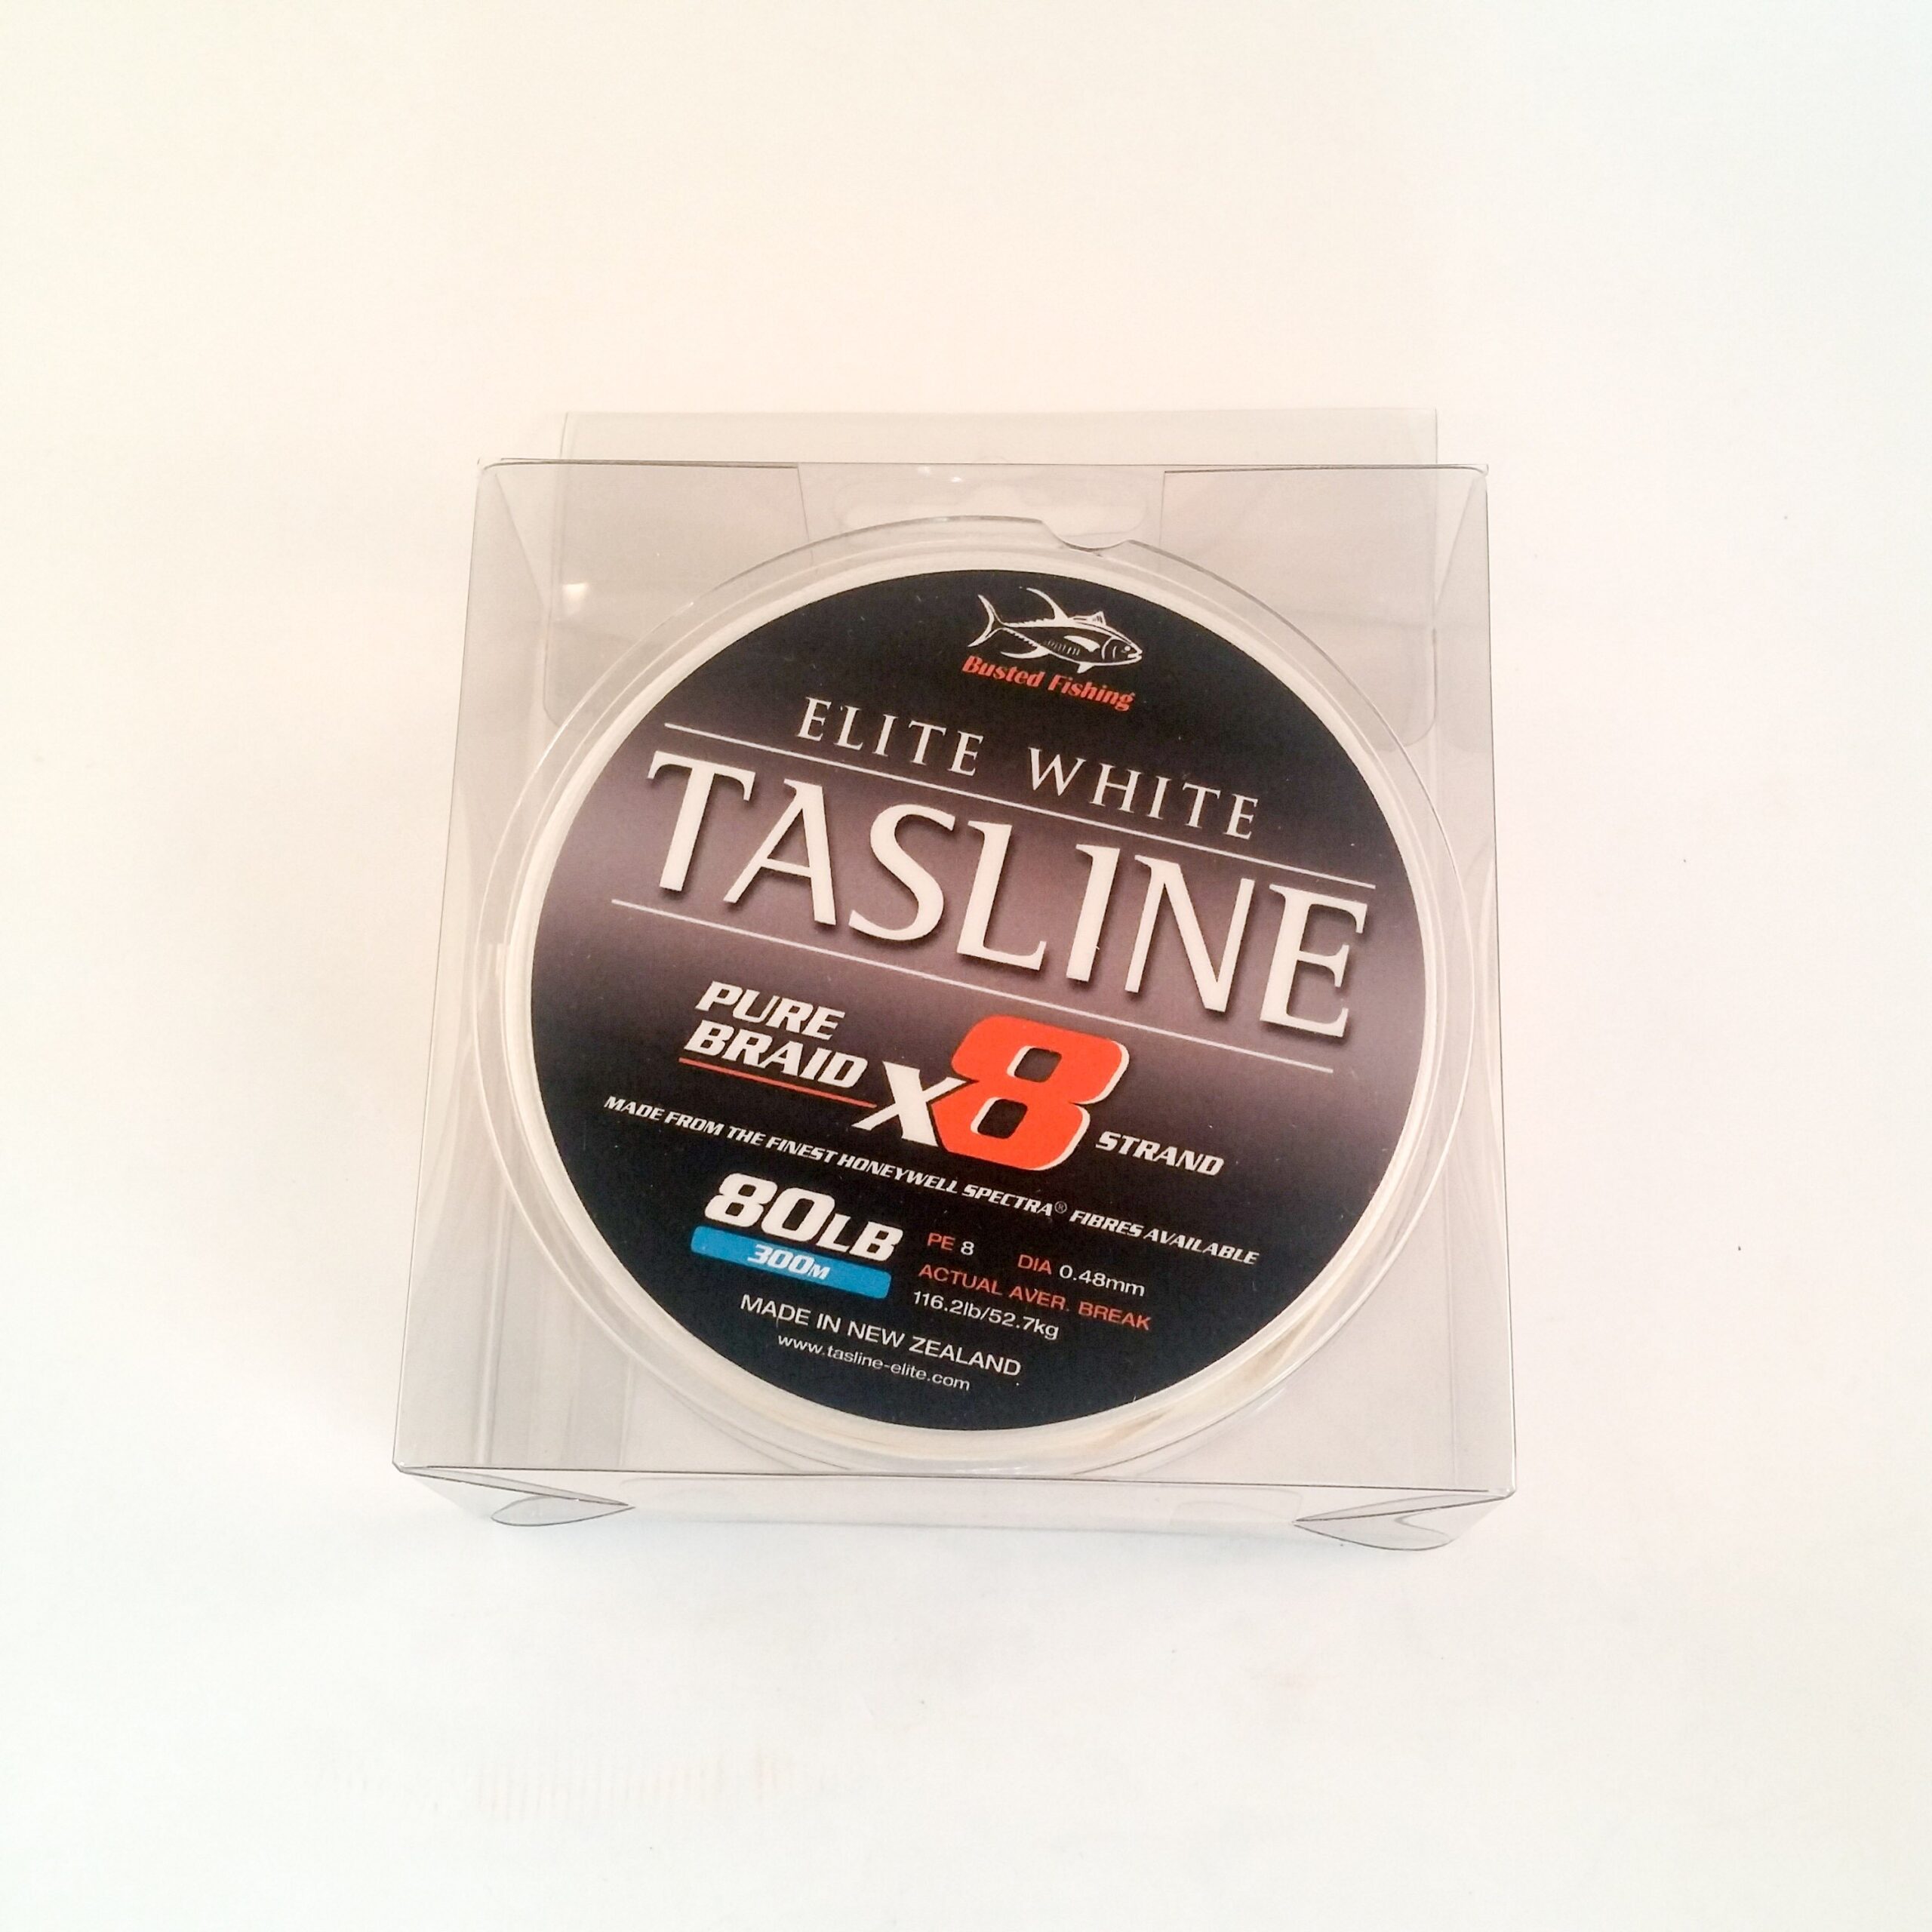 Tasline Elite White 80lb - Tasline